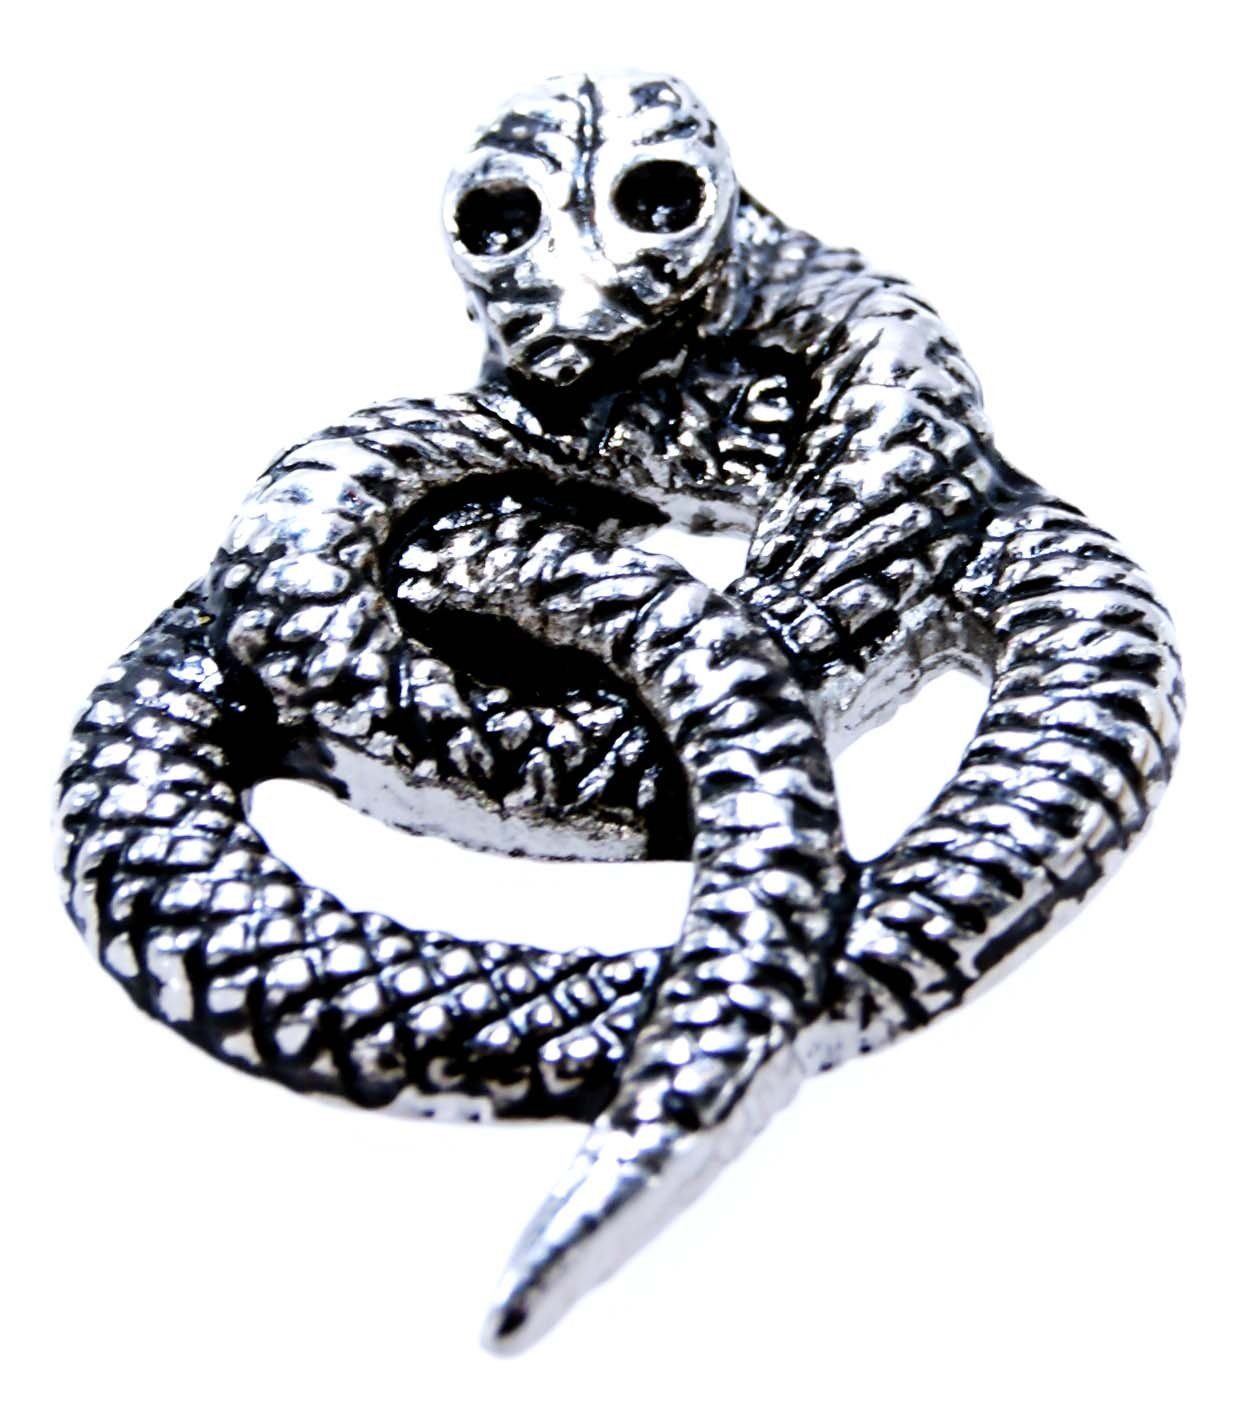 Edelstahl of Leather Anhänger Kiss Schlange Snake Schlangen Kettenanhänger